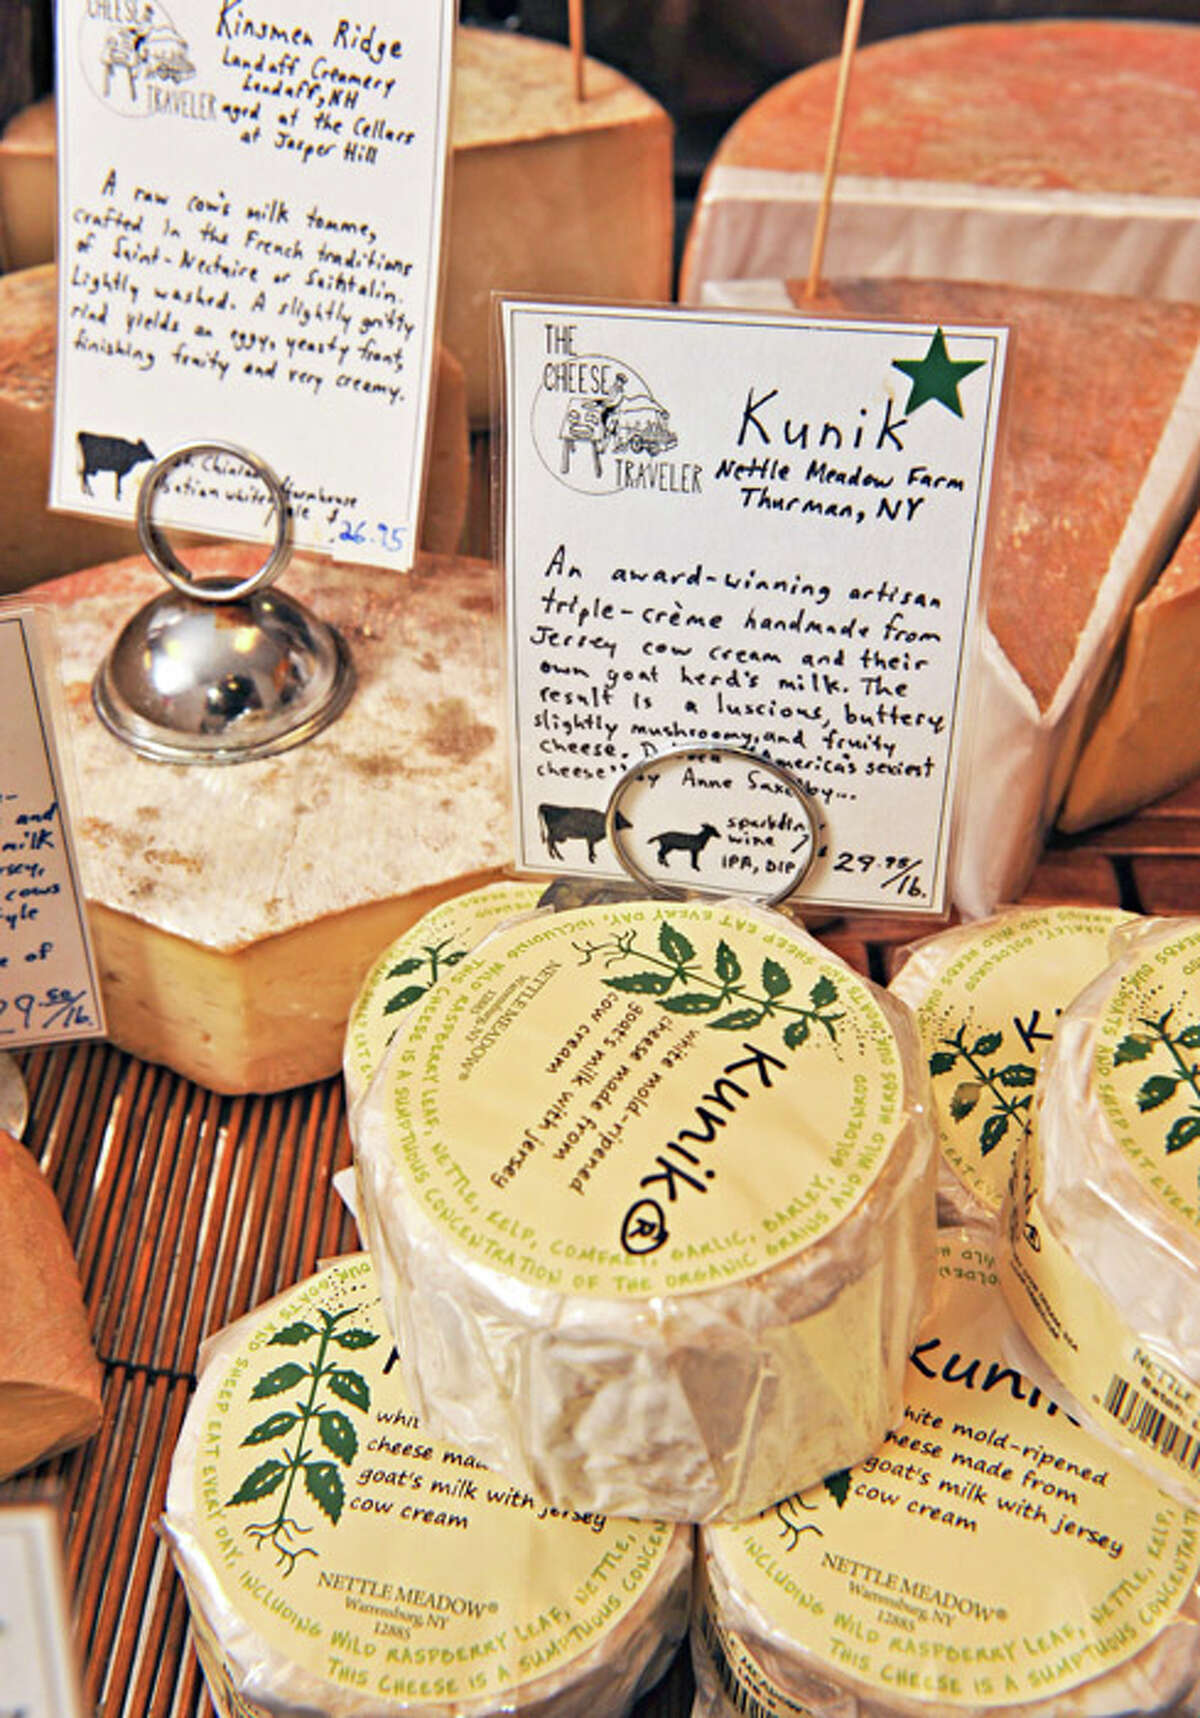 Kunik artisan cheese at The Cheese Traveler in Albany, NY.